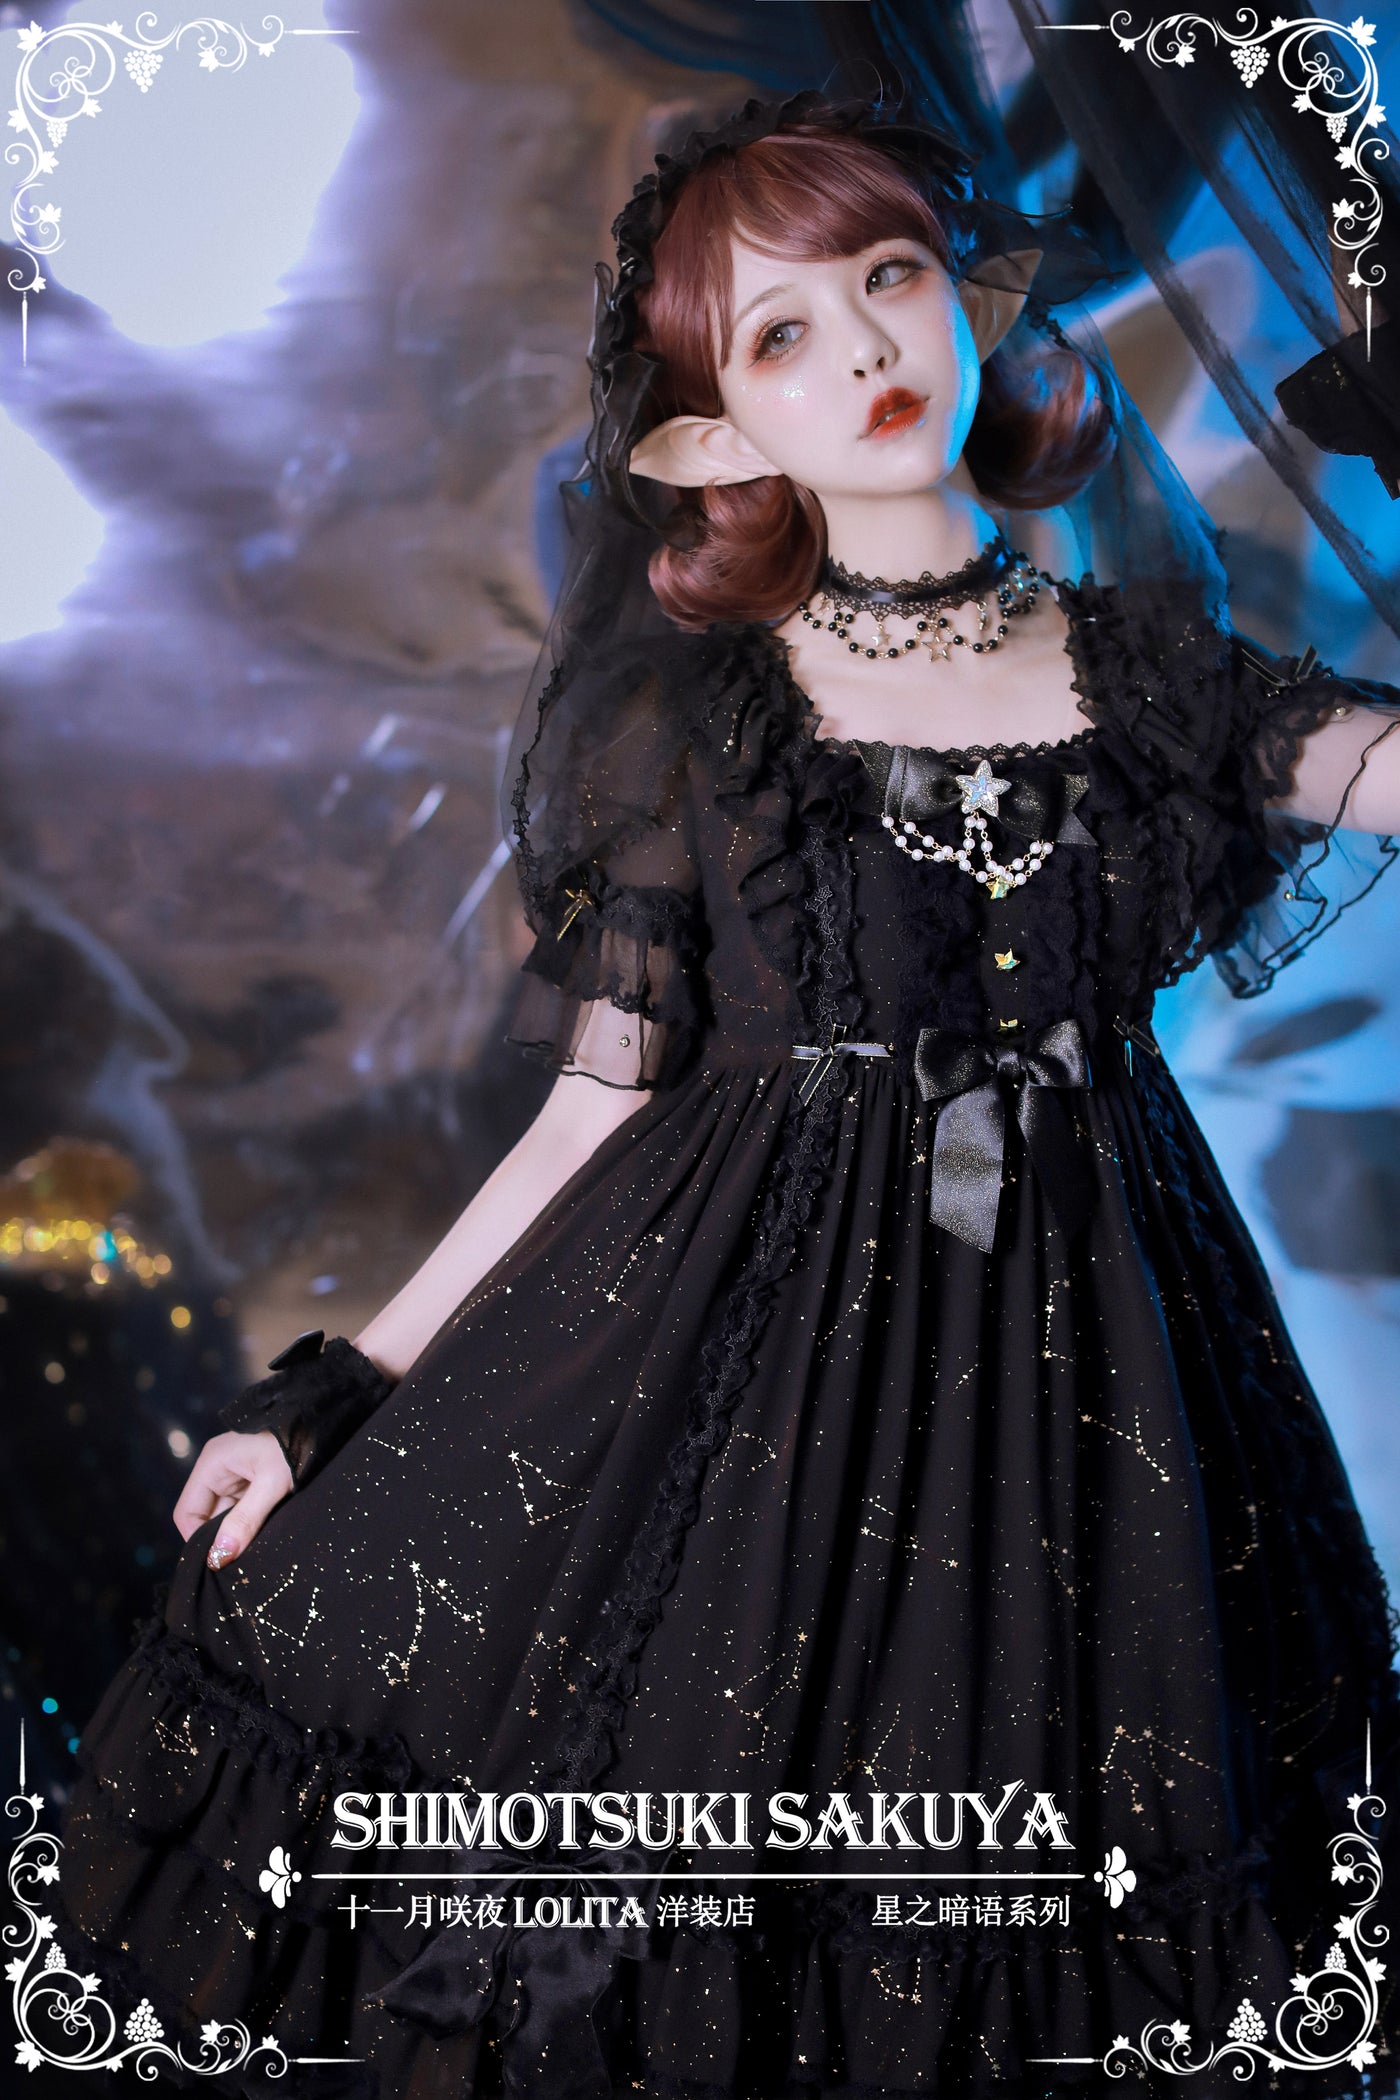 Sakuya Lolita~Whisper of Stars~Vintage Lolita OP Dress Constellation-themed Black Lolita Dress   